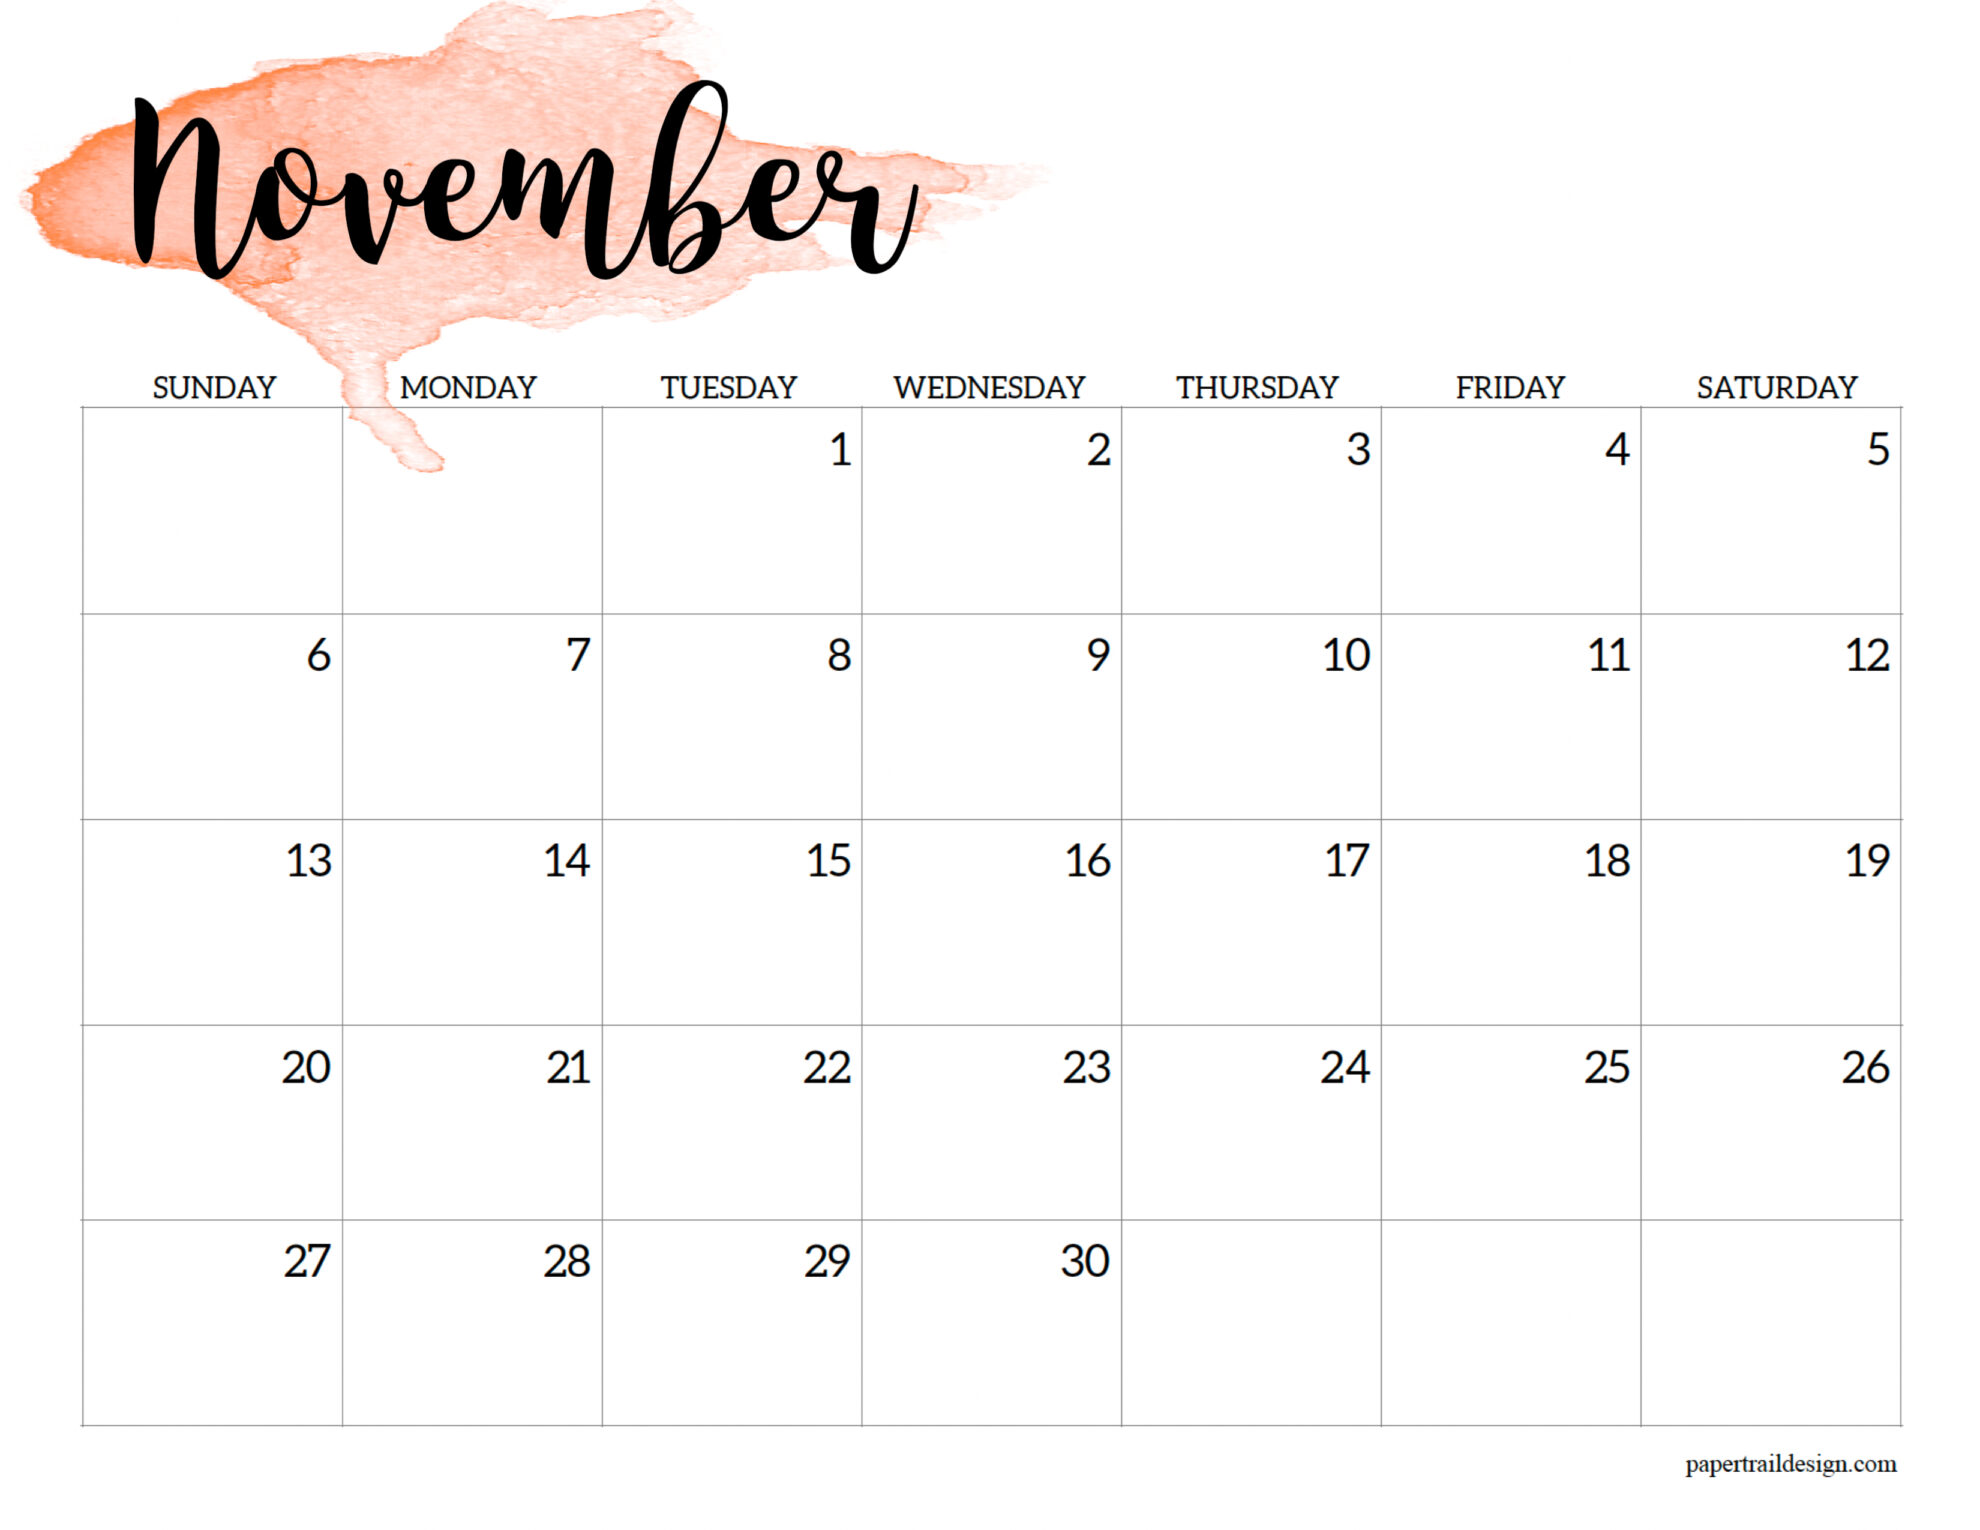 November 2022 Calendar Page 2022 Calendar Printable - Watercolor - Paper Trail Design